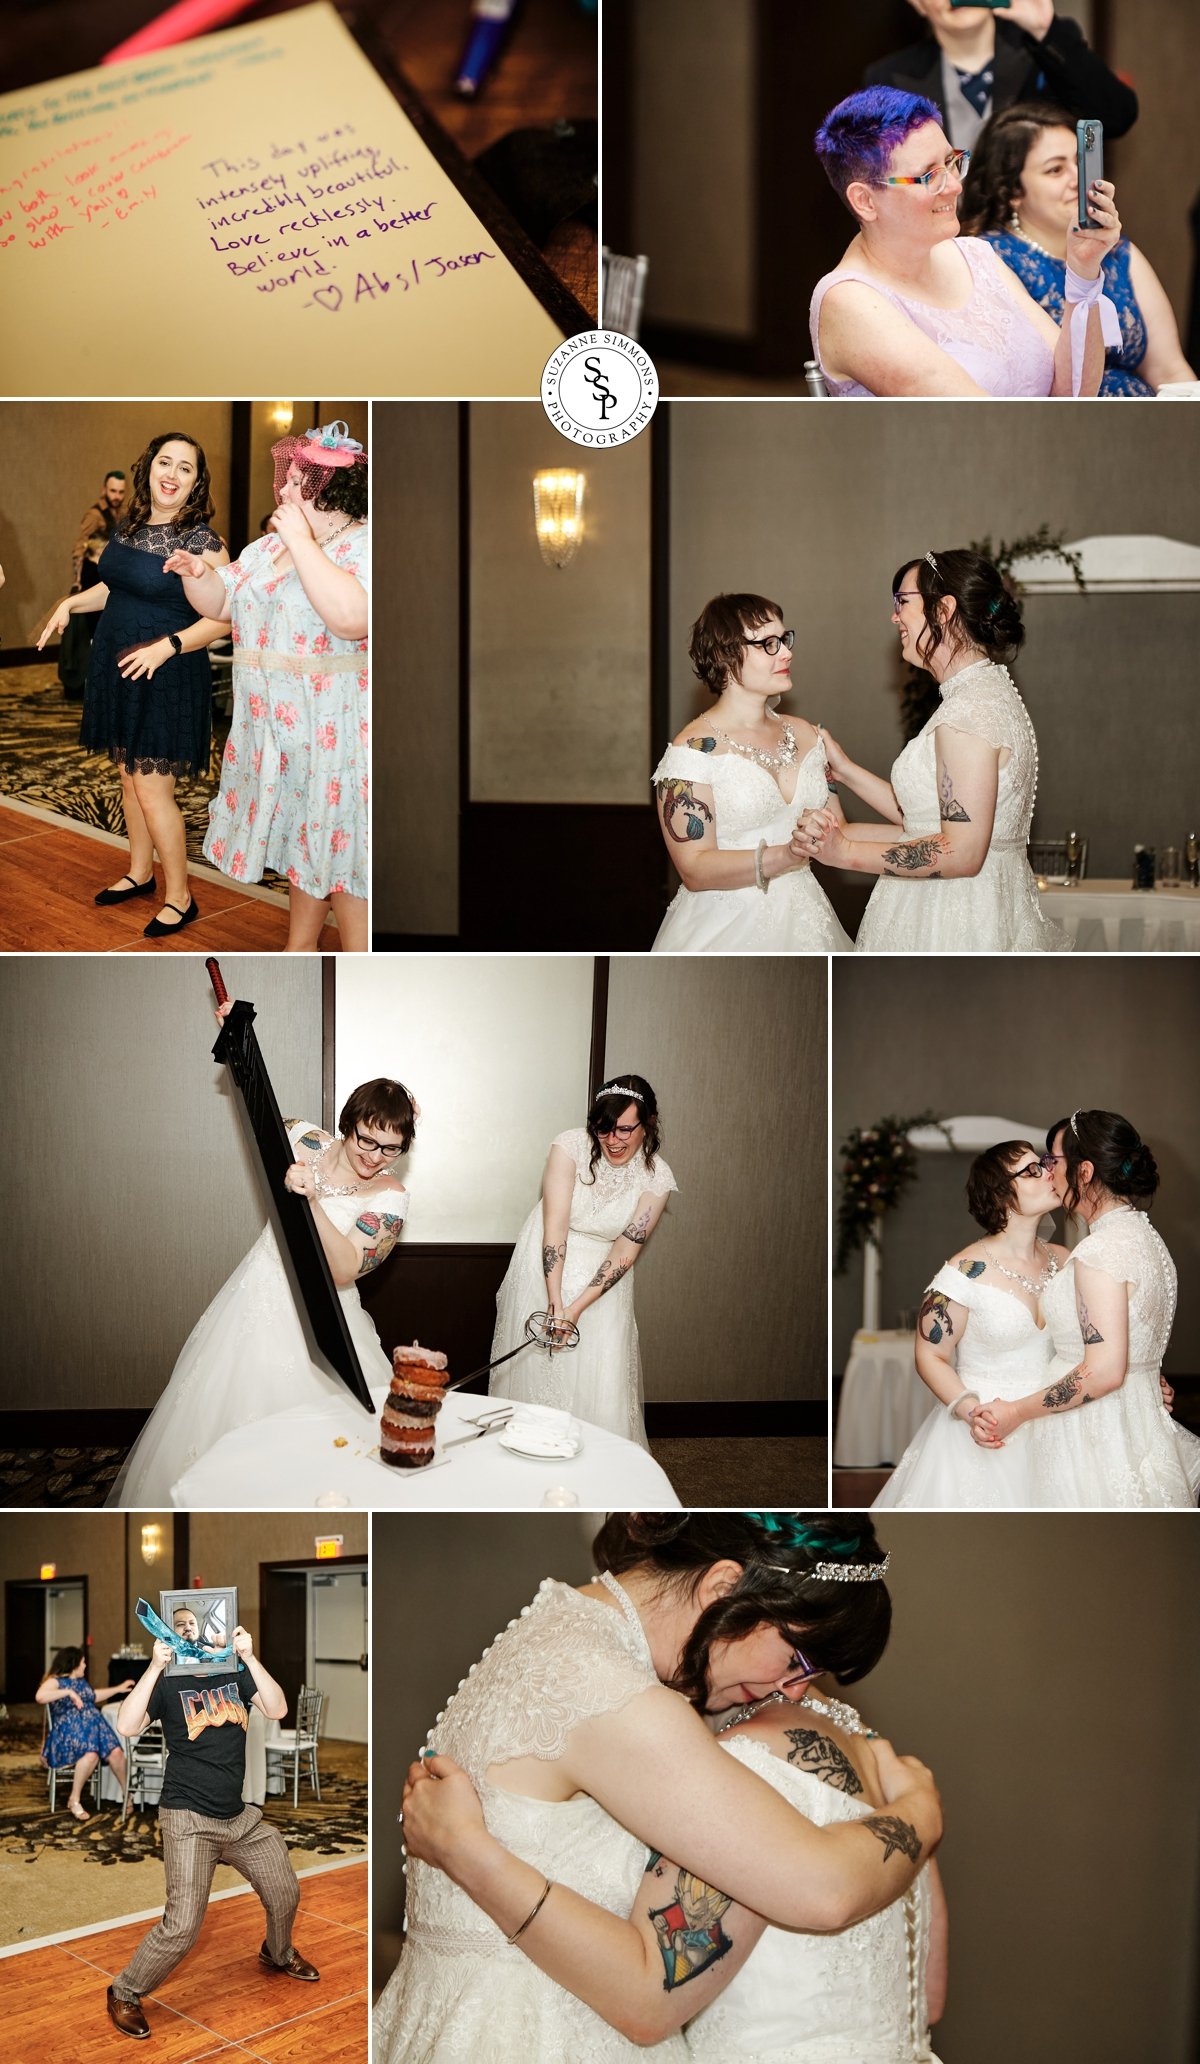 Two brides wedding reception in Portland, Maine